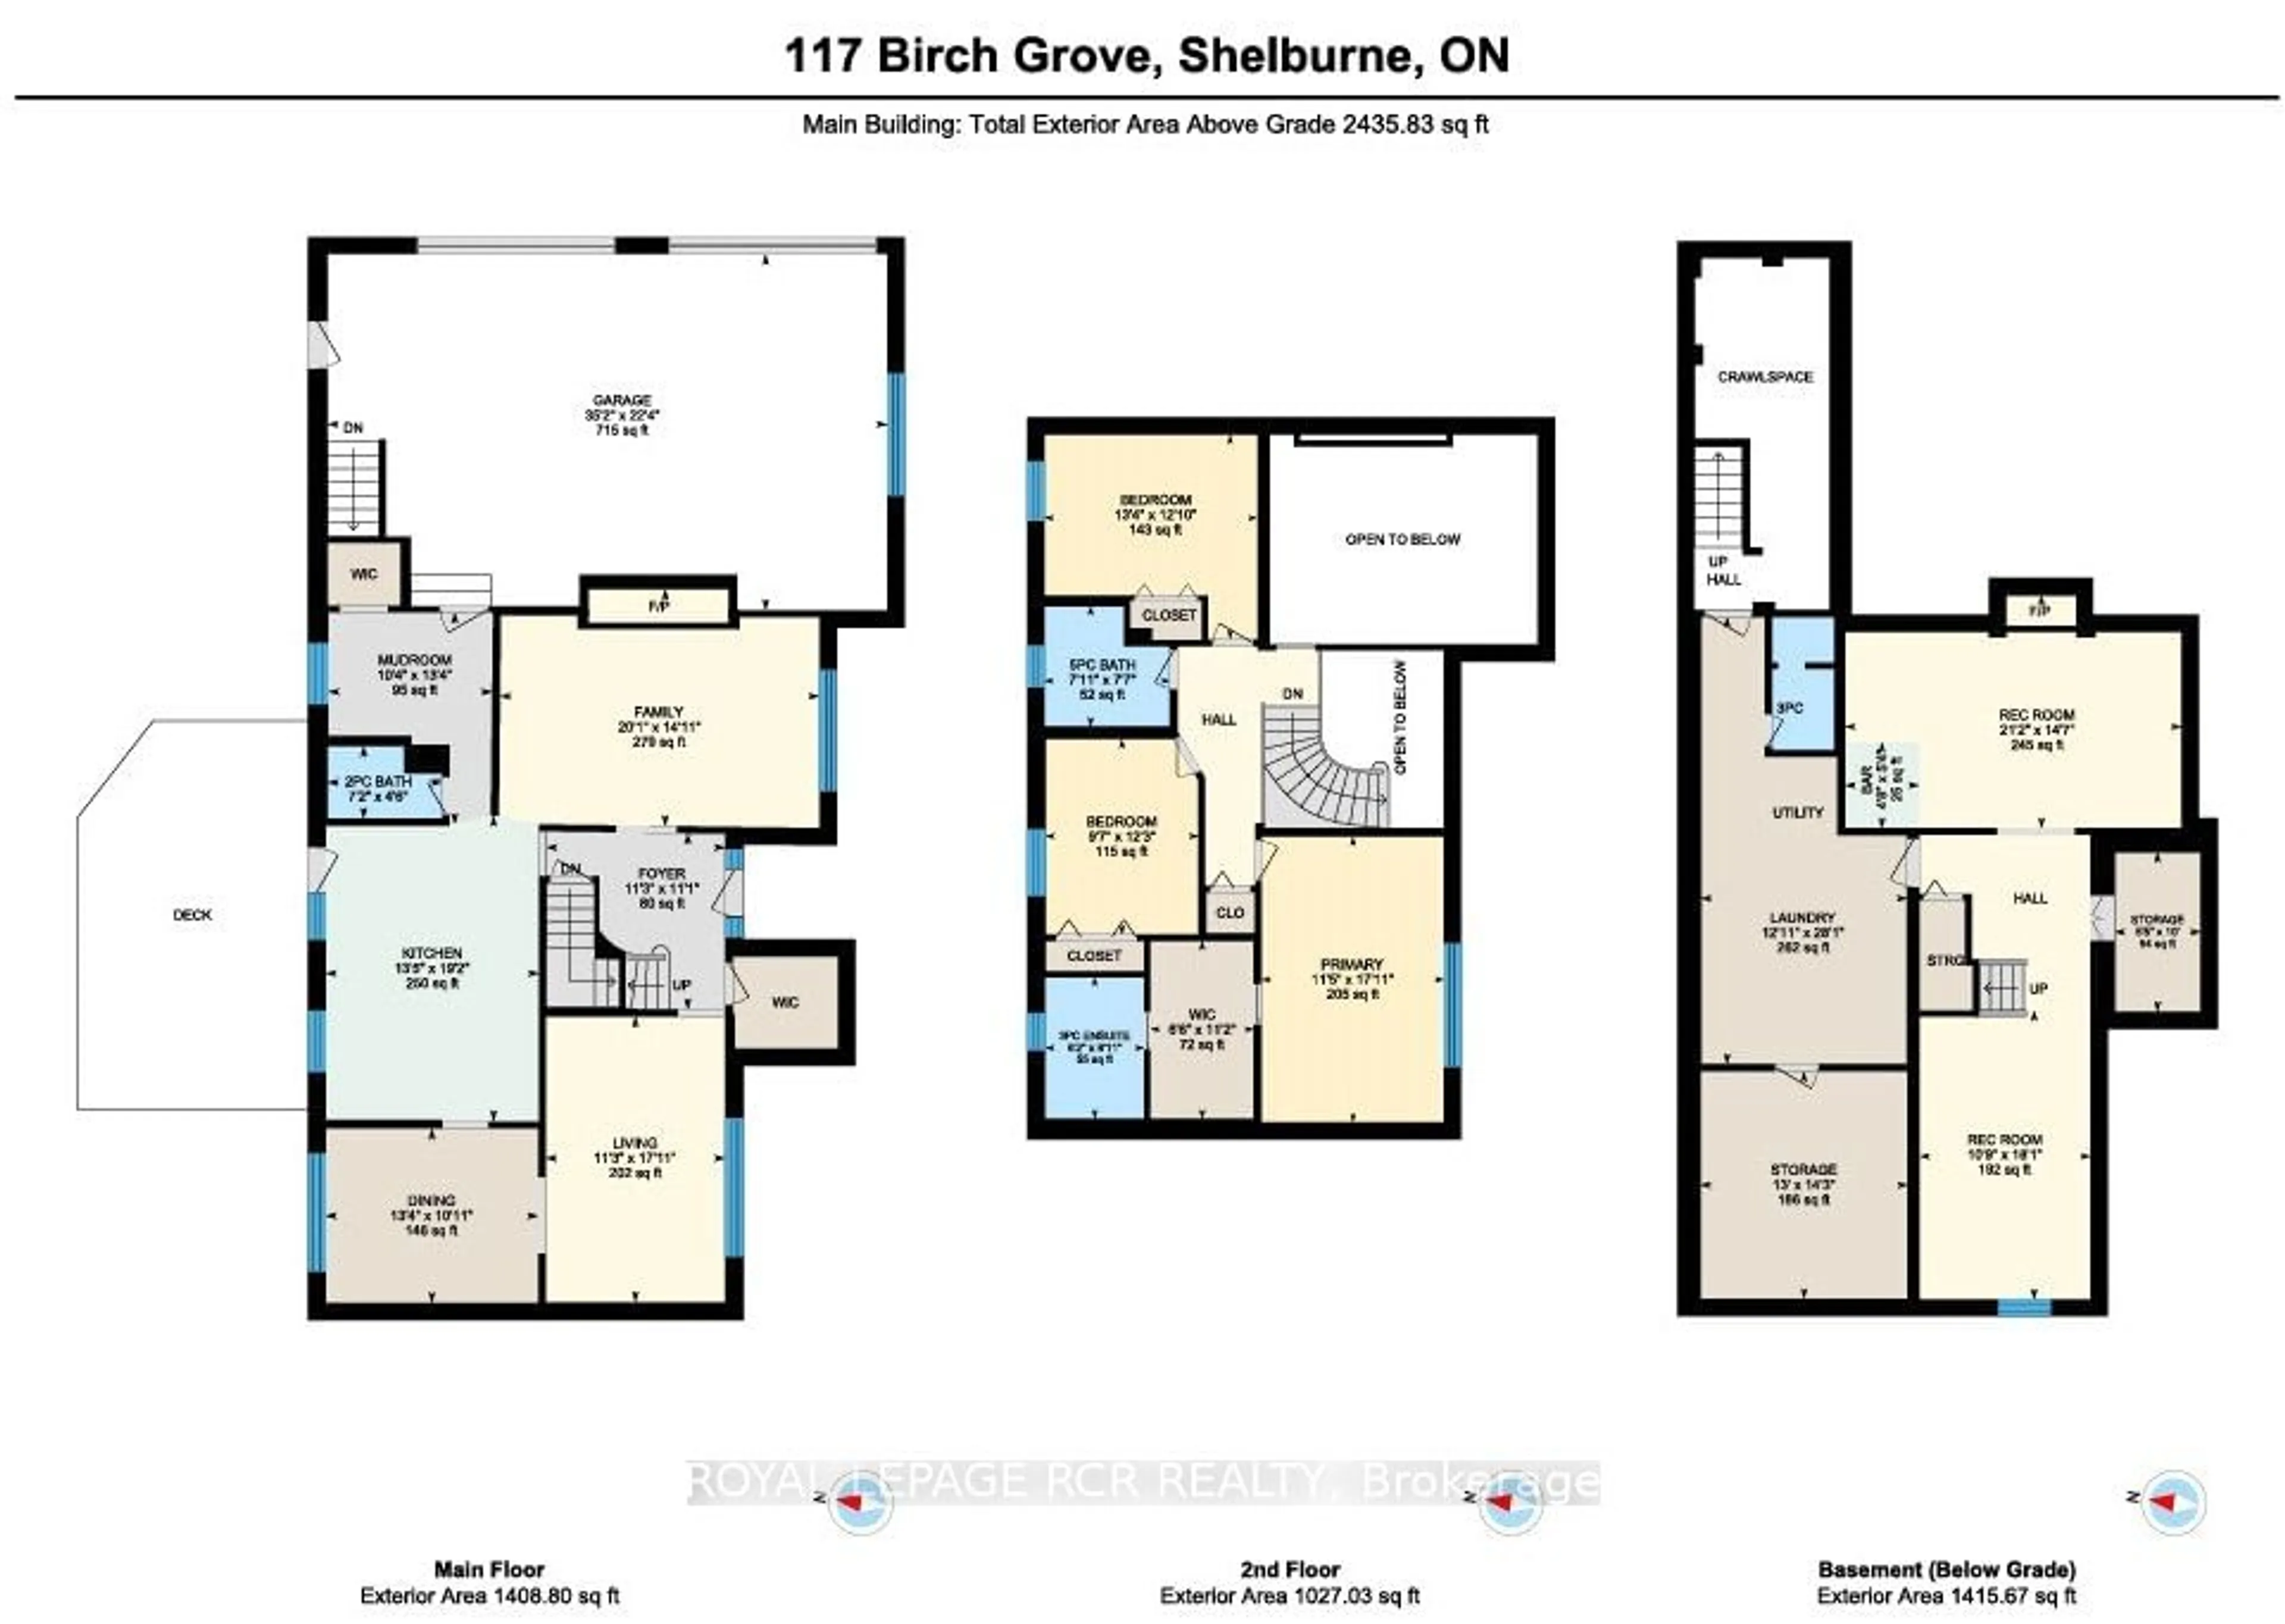 Floor plan for 117 Birch Grve, Shelburne Ontario L9V 2W3